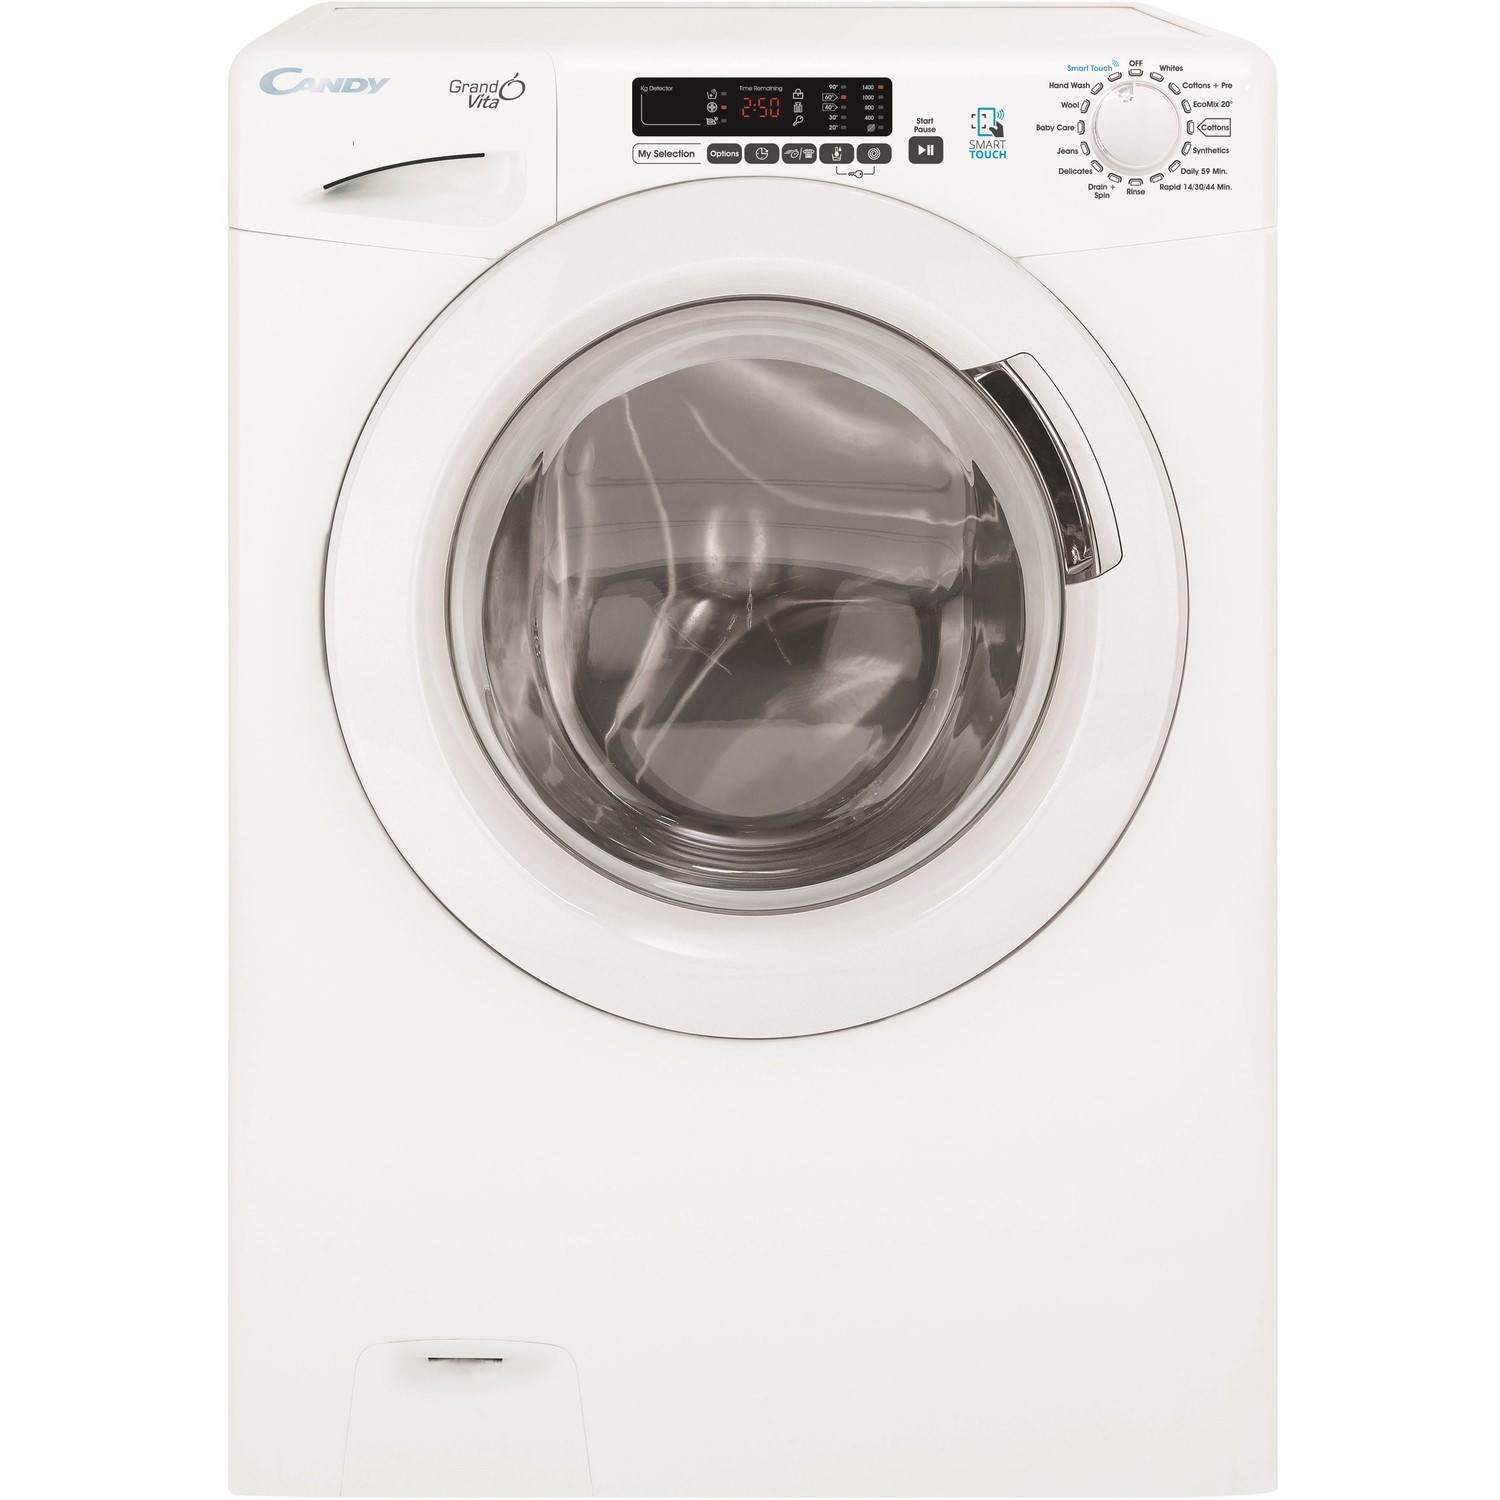 Refurbished Candy Grand OVita GVS148D3-80 Freestanding 8KG 1400 Spin Washing Machine White